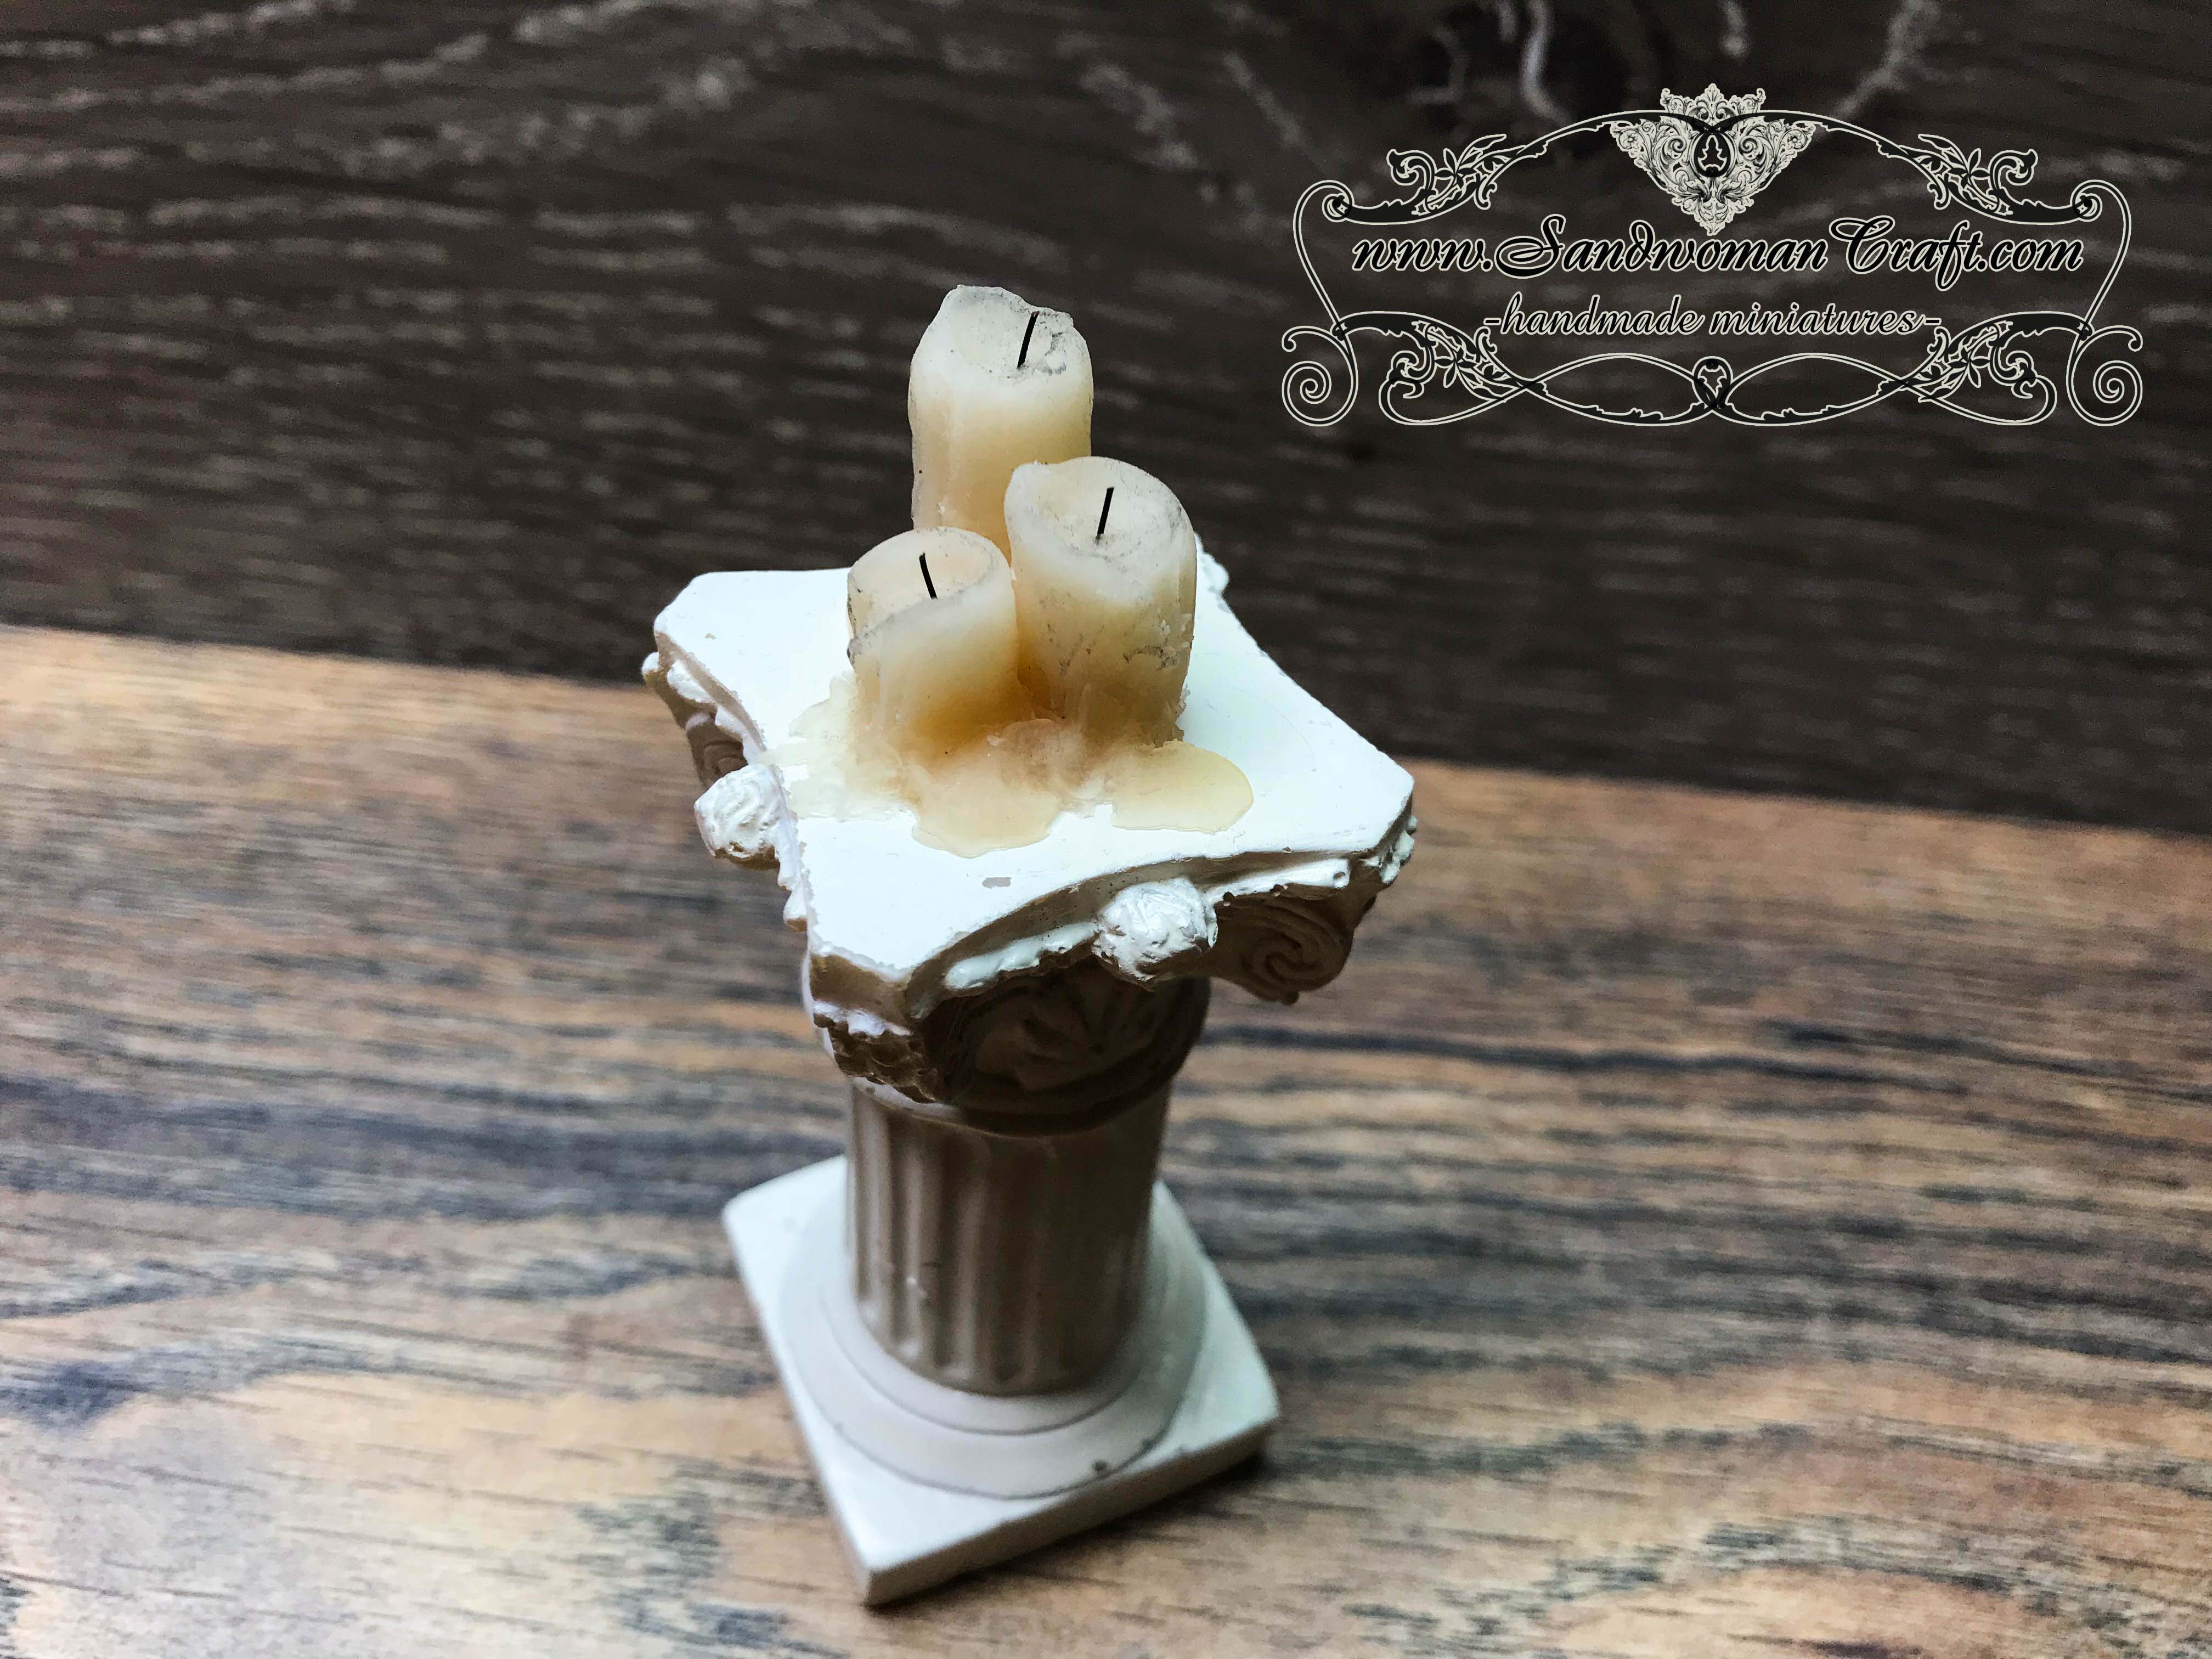 Miniature candles